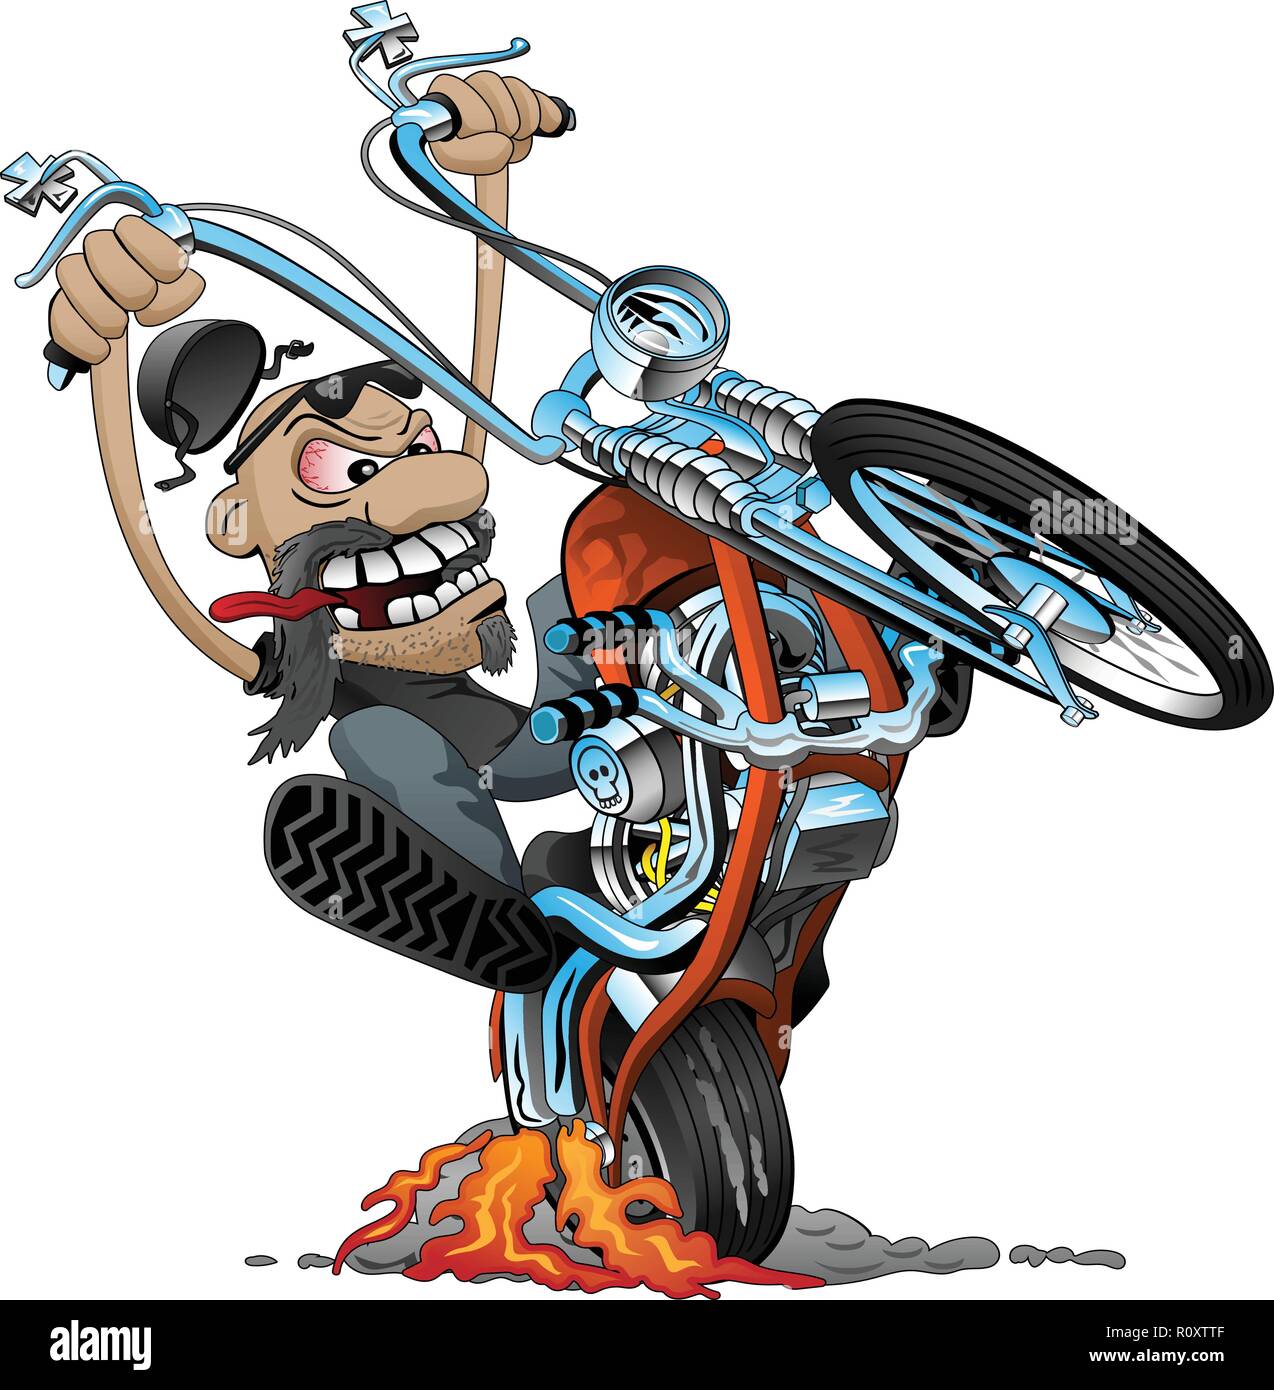 Crazy Biker auf einem Old School chopper Motorrad cartoon Vector Illustration Stock Vektor